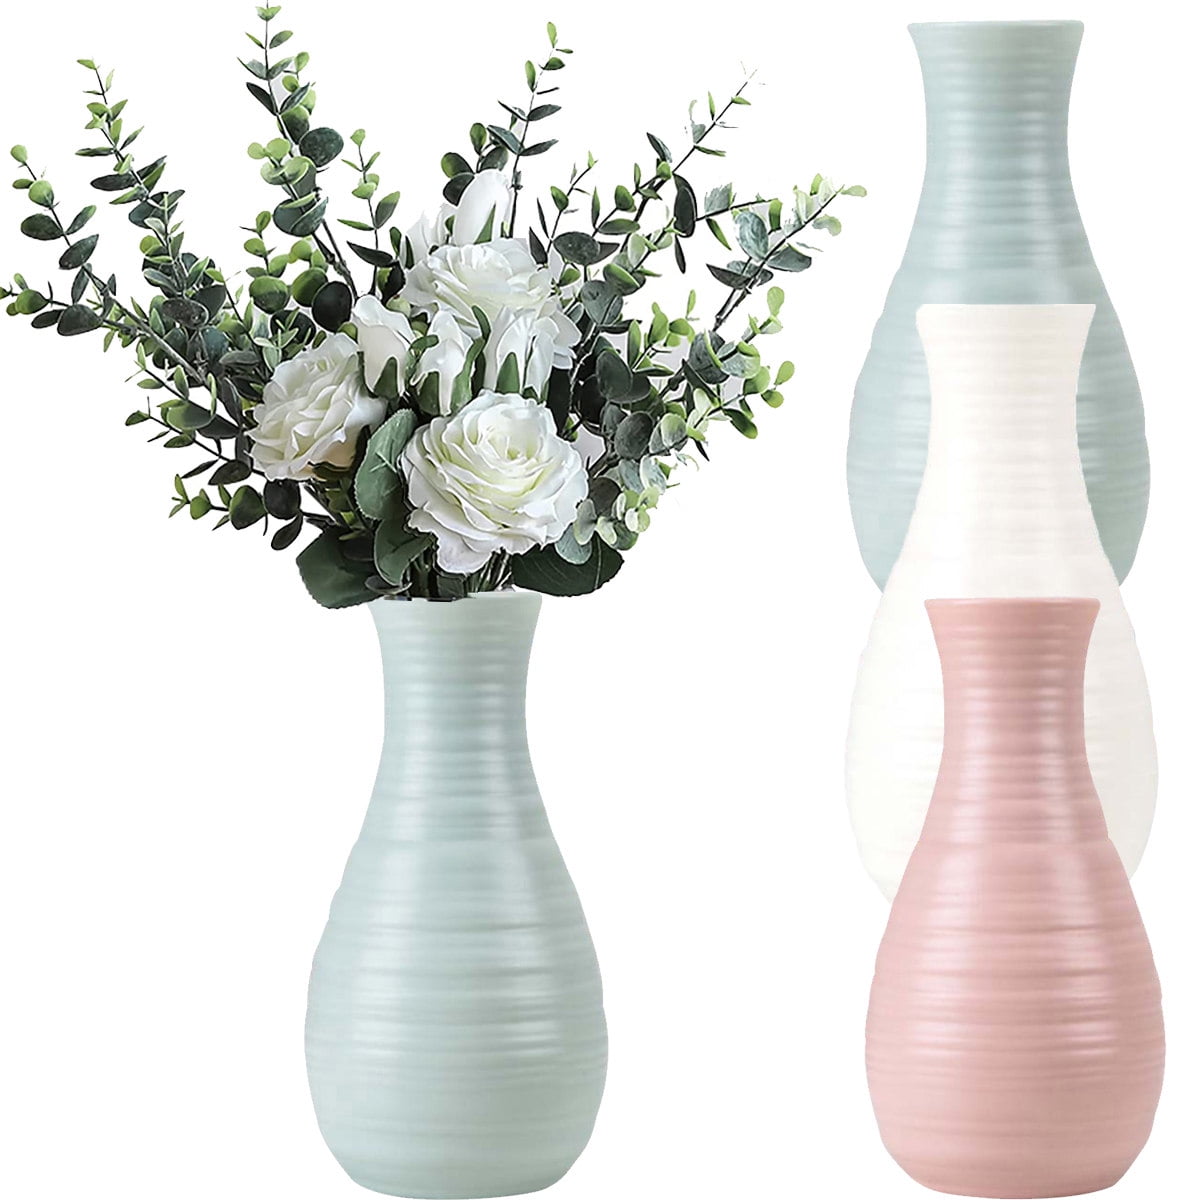 Durable Plastic Vase Flower Pot Plants Basket Home Office Living Room Decoration 